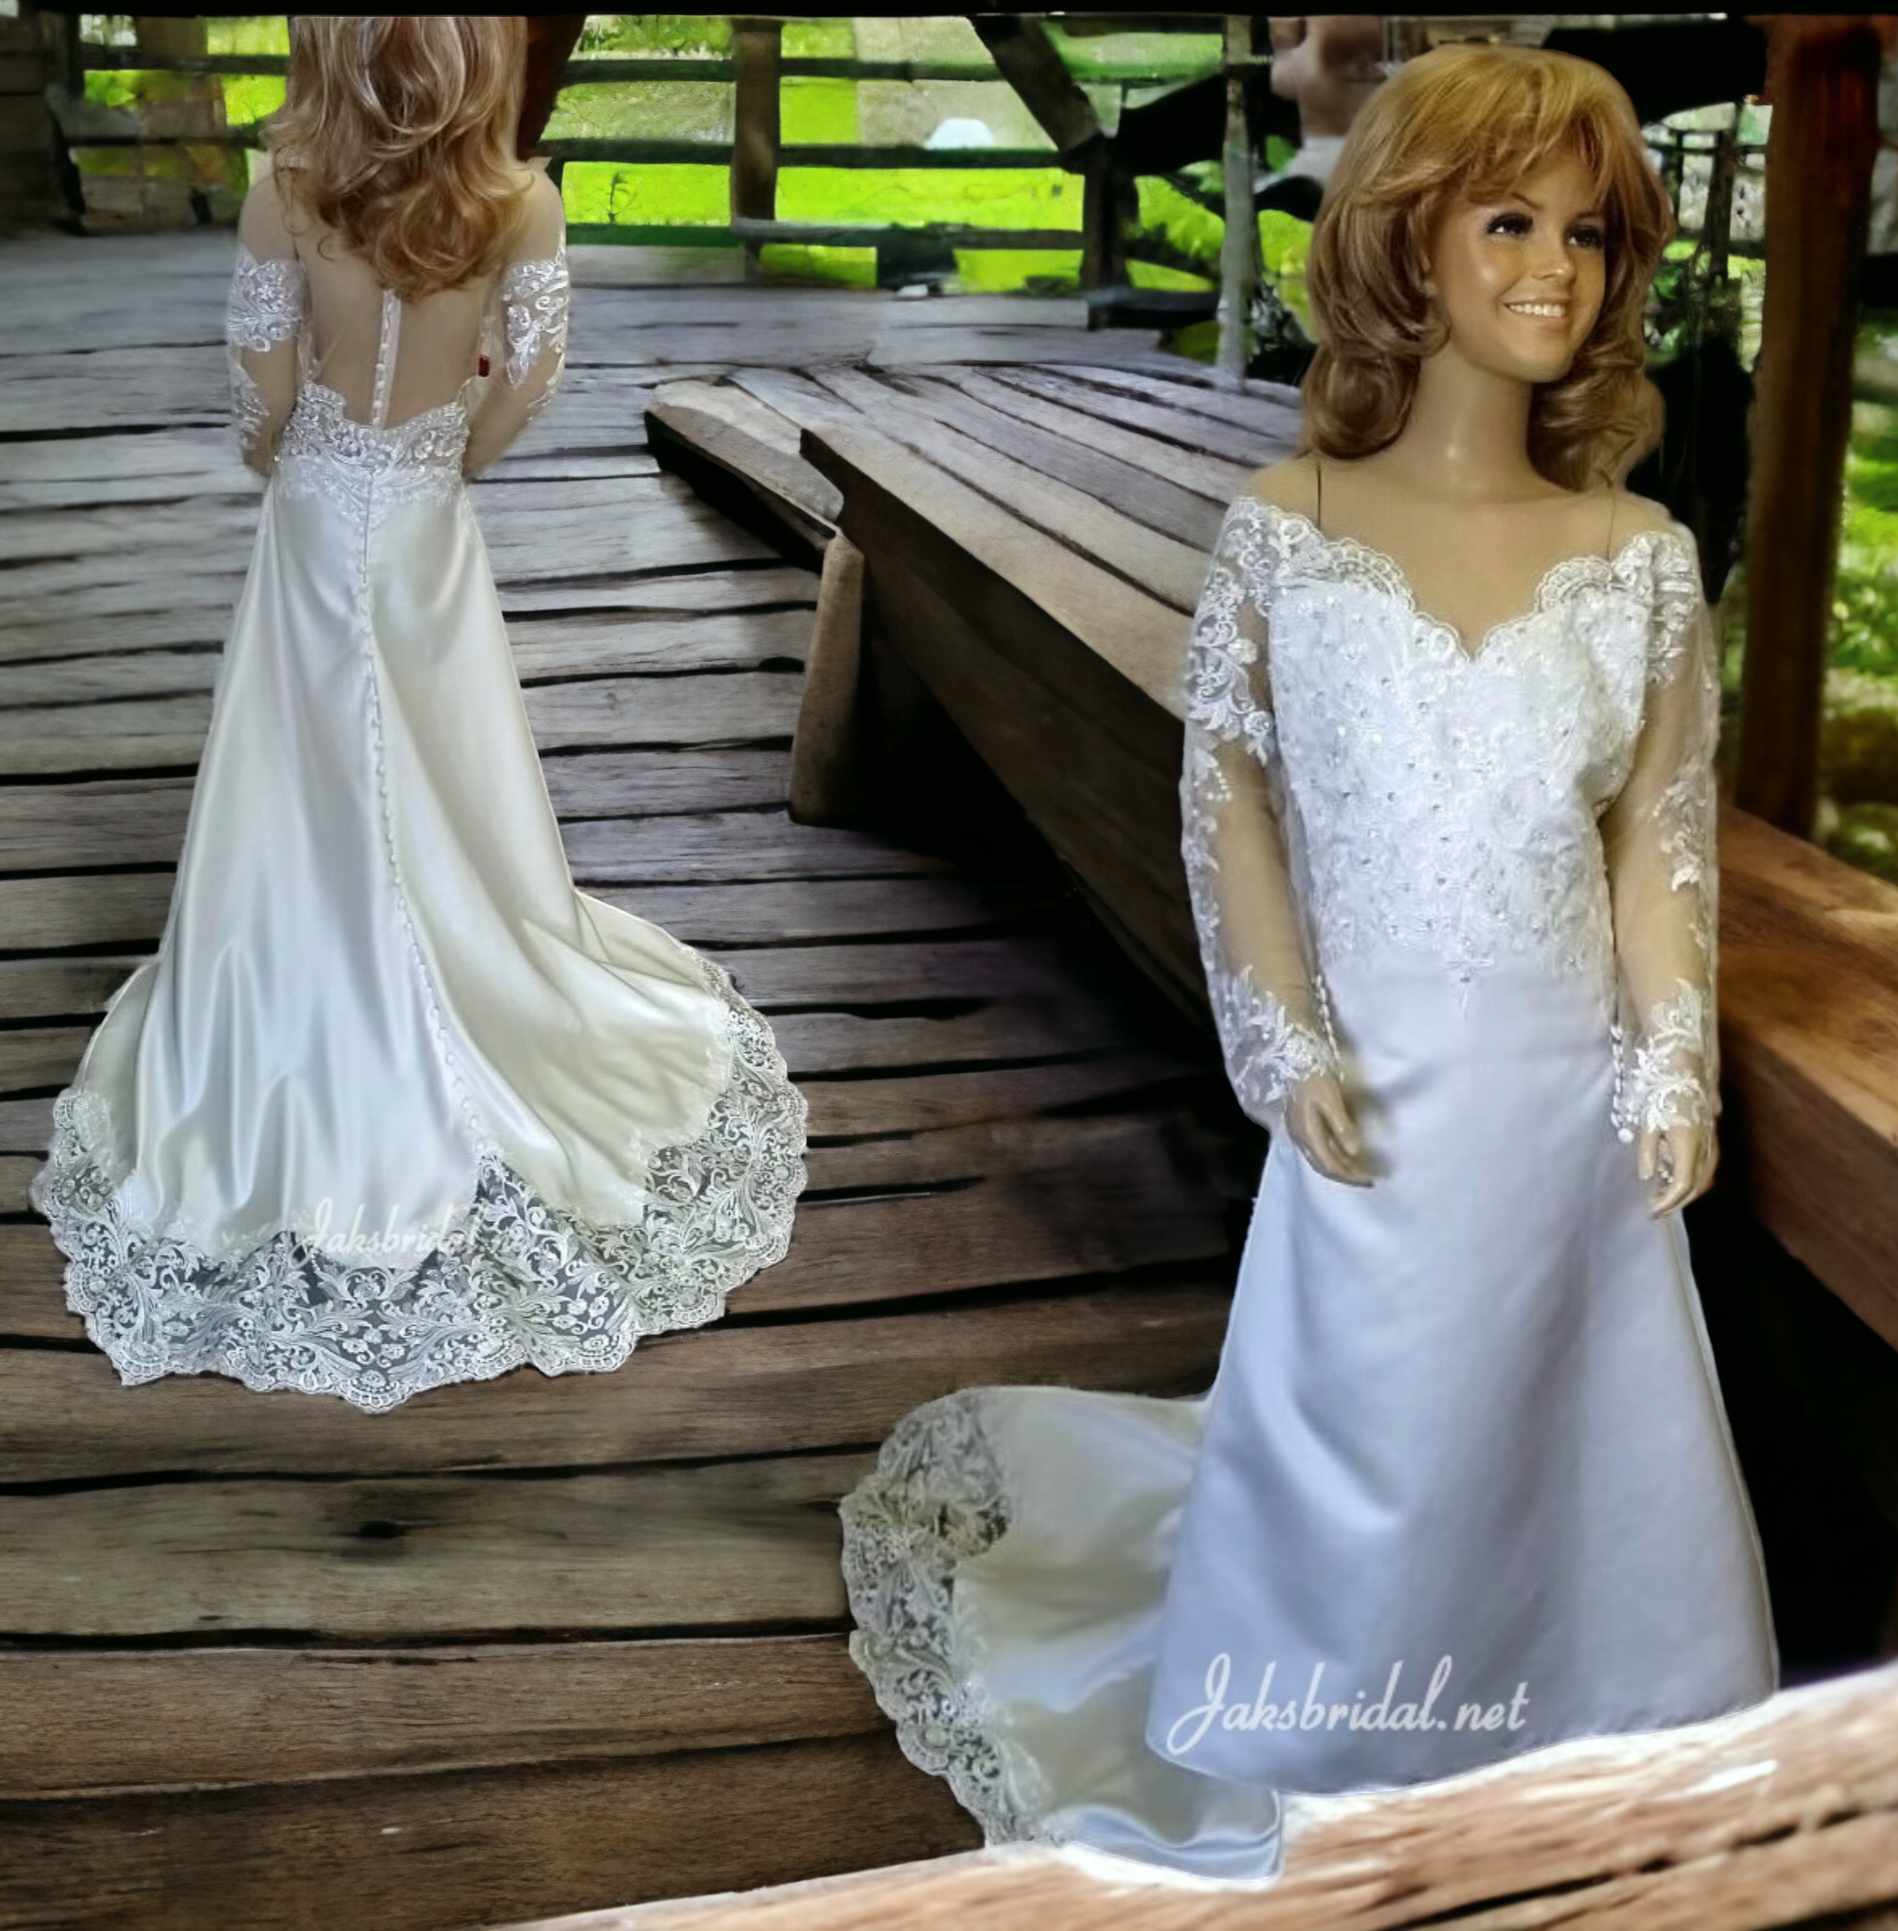 matched flower girl dress to brides dress